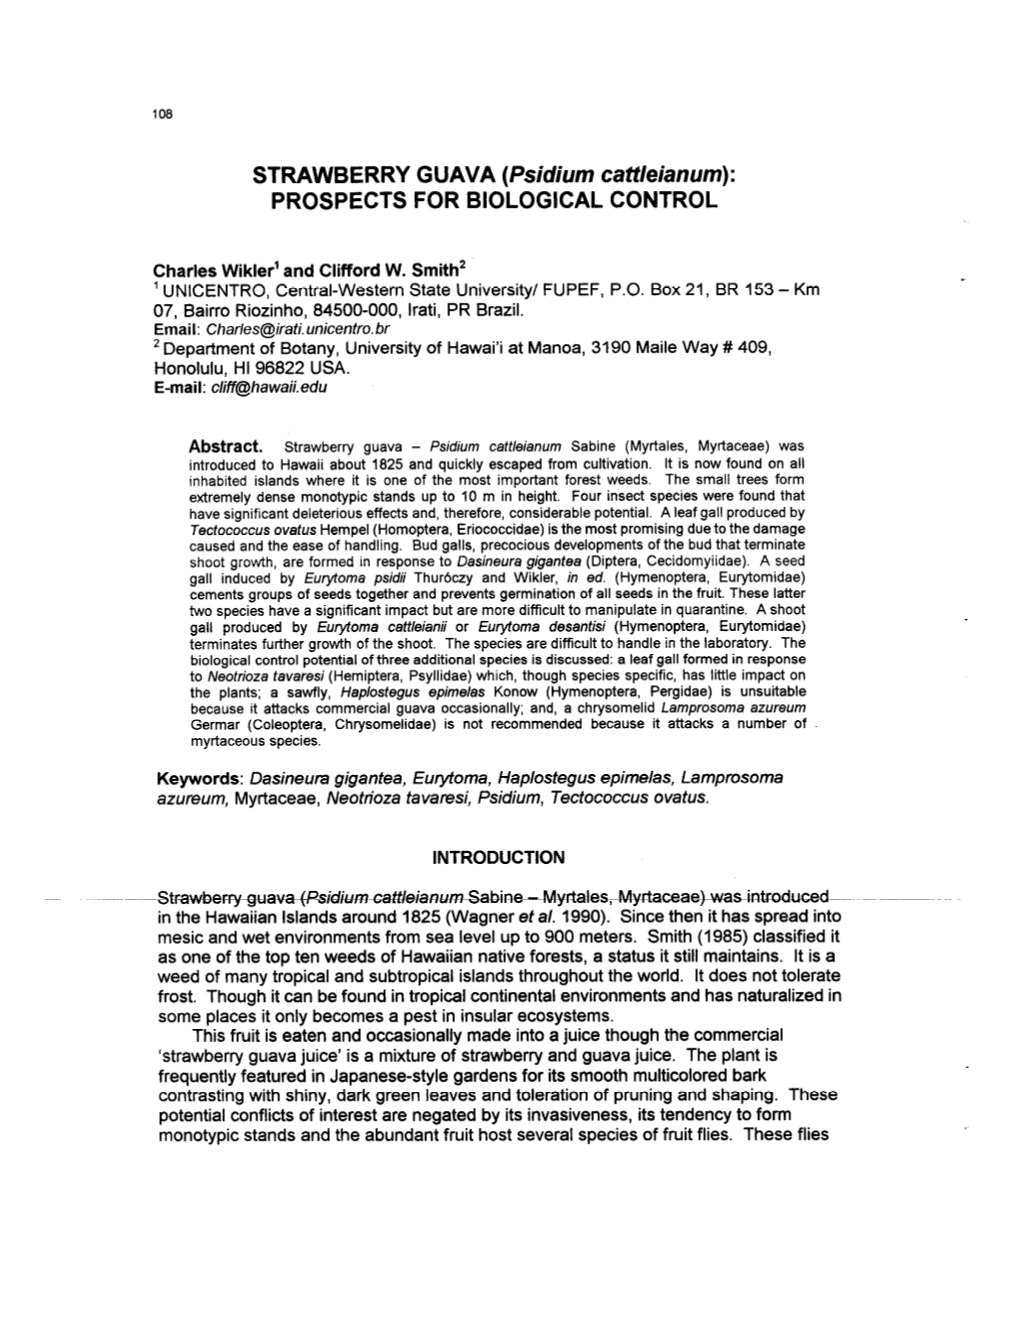 STRAWBERRY GUAVA (Psidium Cattleianum): PROSPECTS for BIOLOGICAL CONTROL